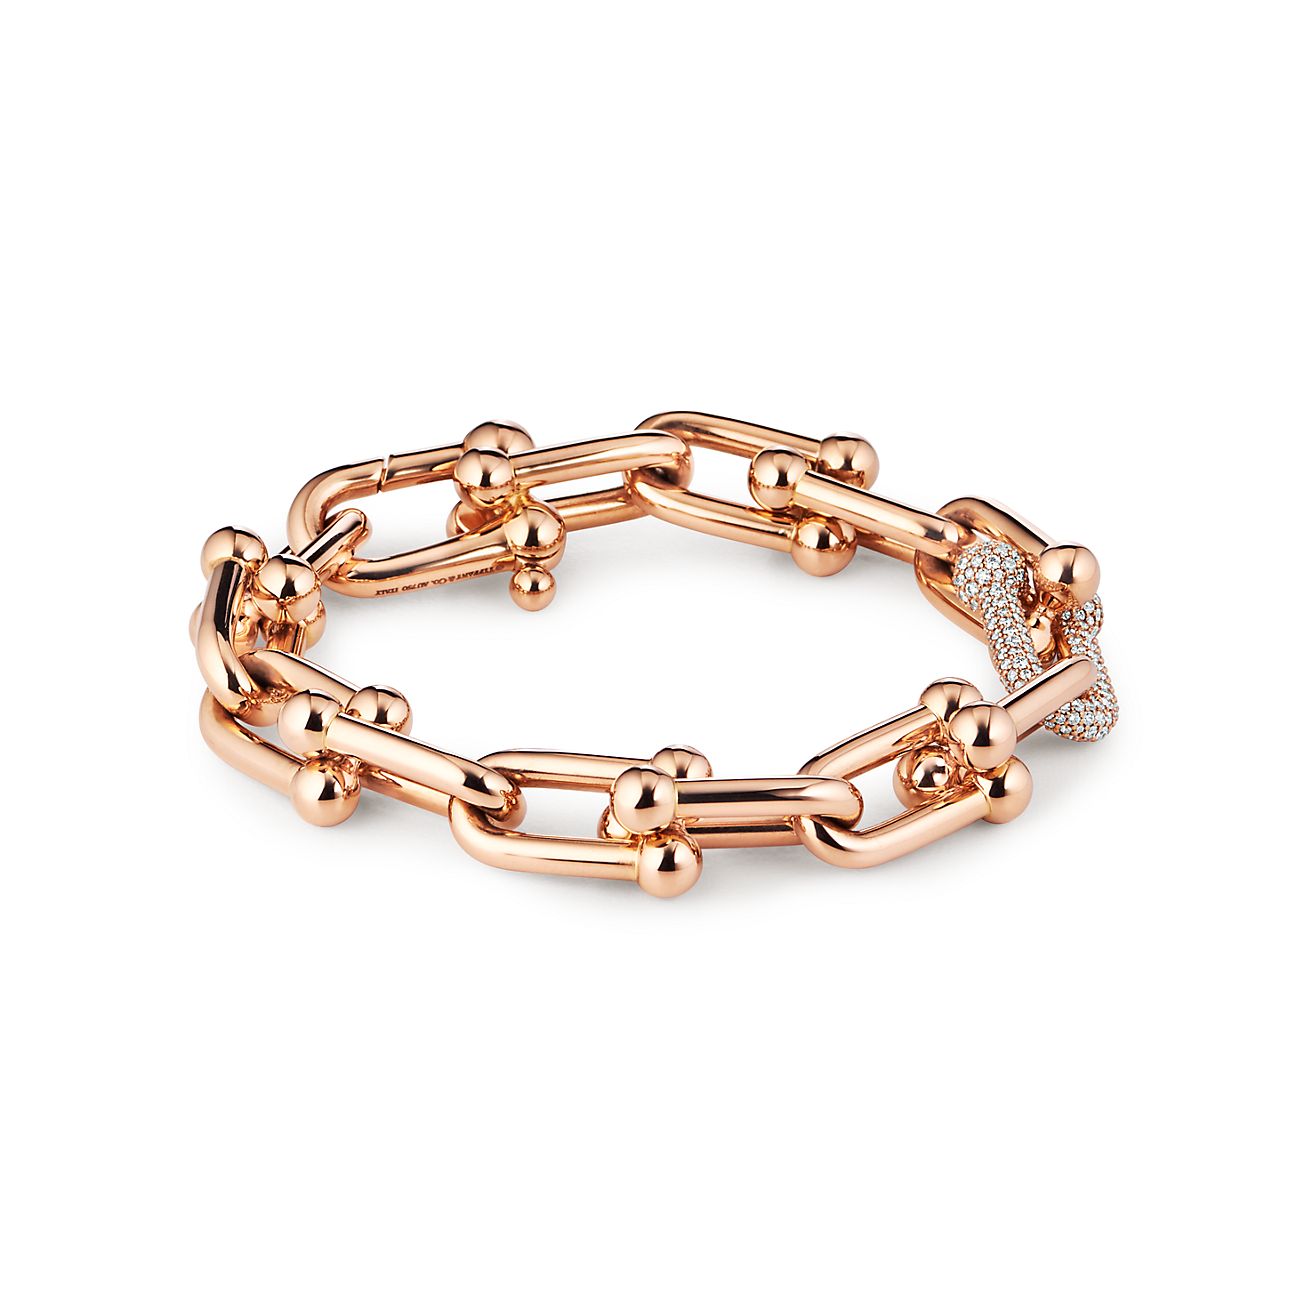 Tiffany HardWear Link Bracelet in 18k Gold with Diamonds, Medium